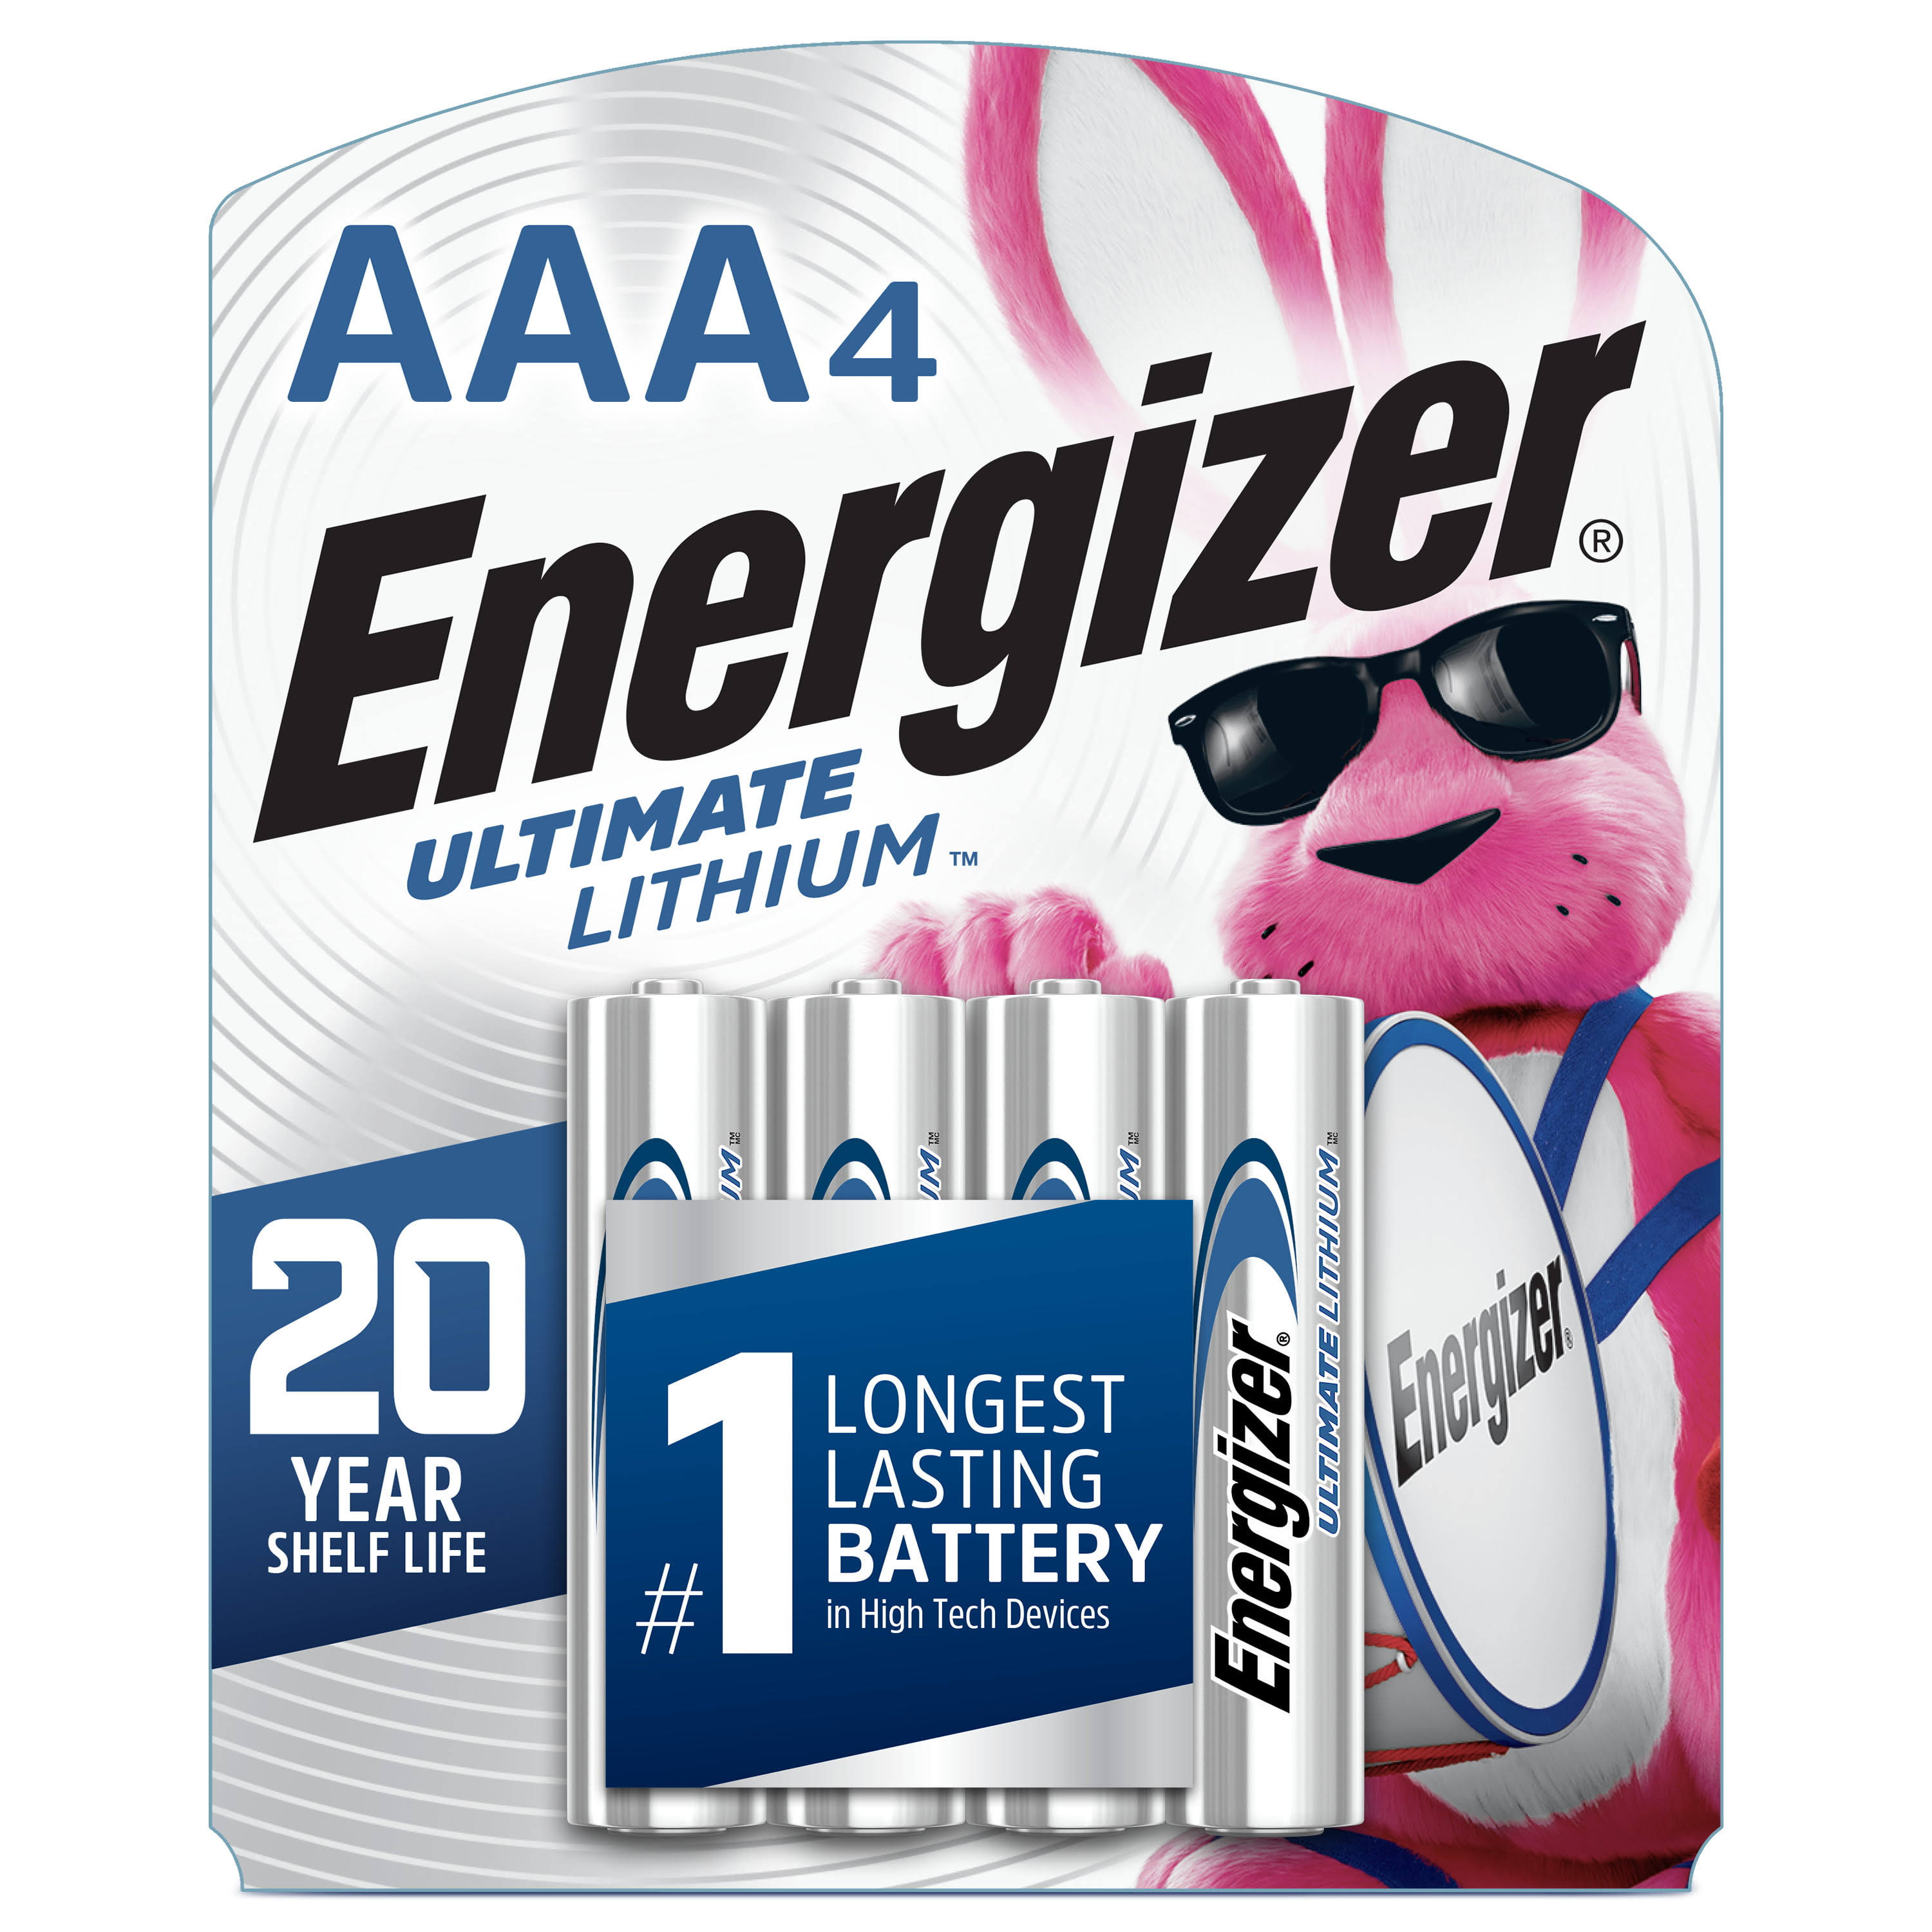 Energizer Ultimate Lithium AAA Lithium Batteries - 4pk